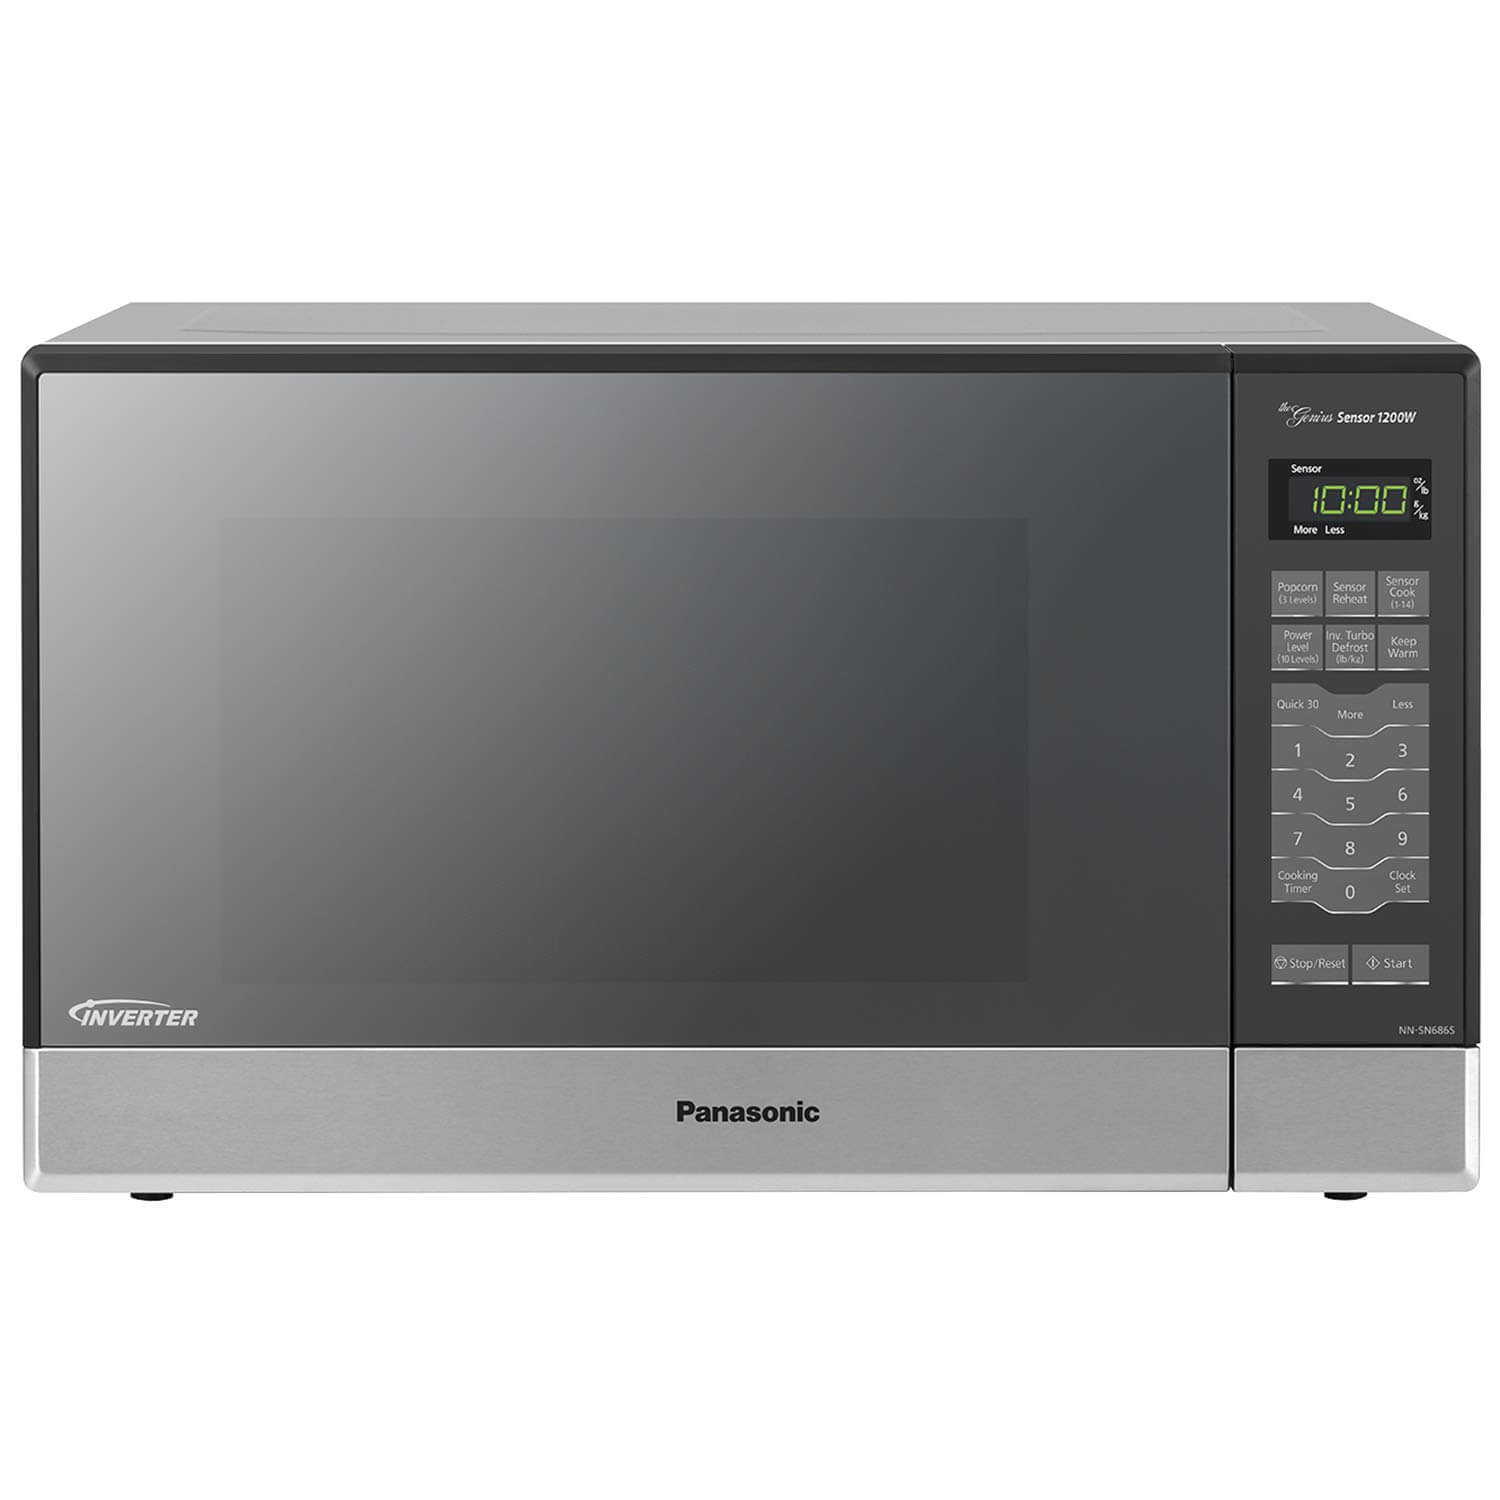 Panasonic Microwave Oven NN-SN686S